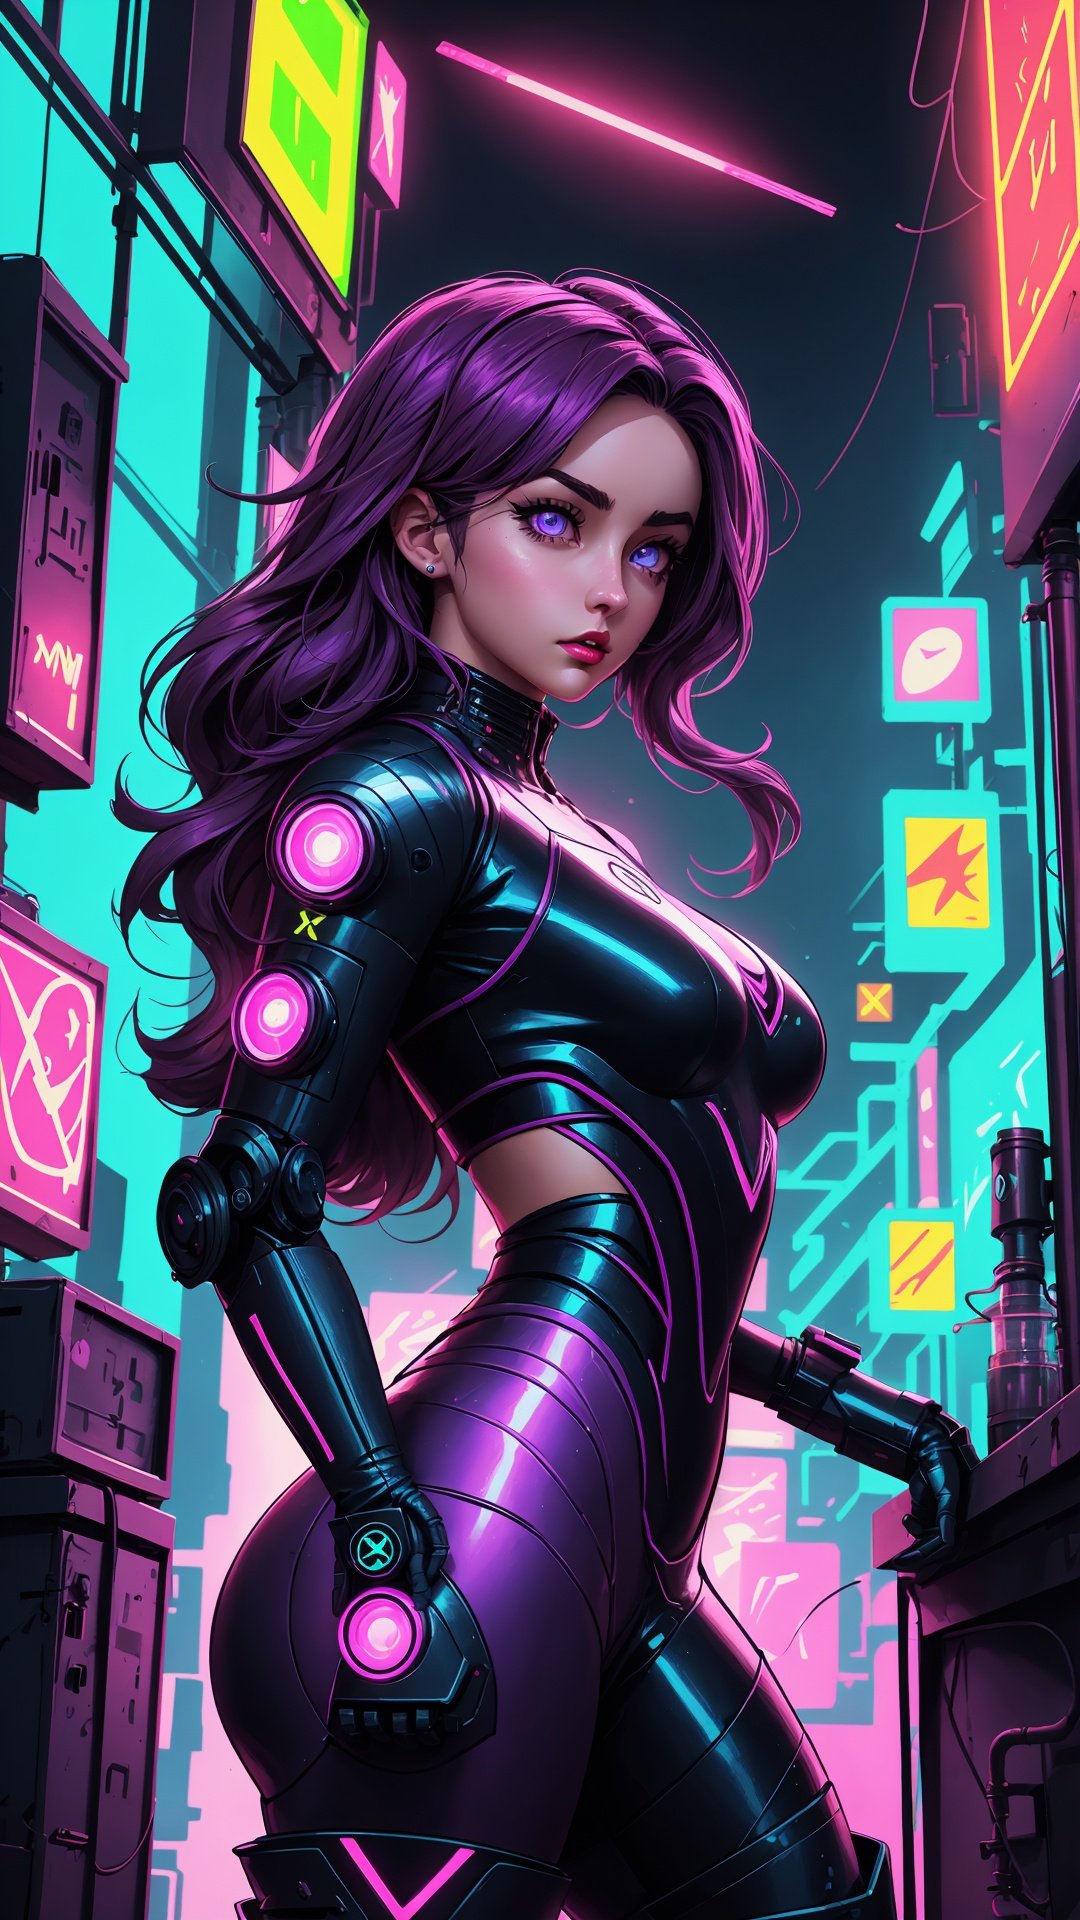 Ana De Armas as cyberpunk ninja robot warrior, light purple Eyes, Marvel X-23, goth, Julie Bell, Patrick Nagle, art style, frontal perspective, action shot, vibrant color, high detail, Laboratory neon background.